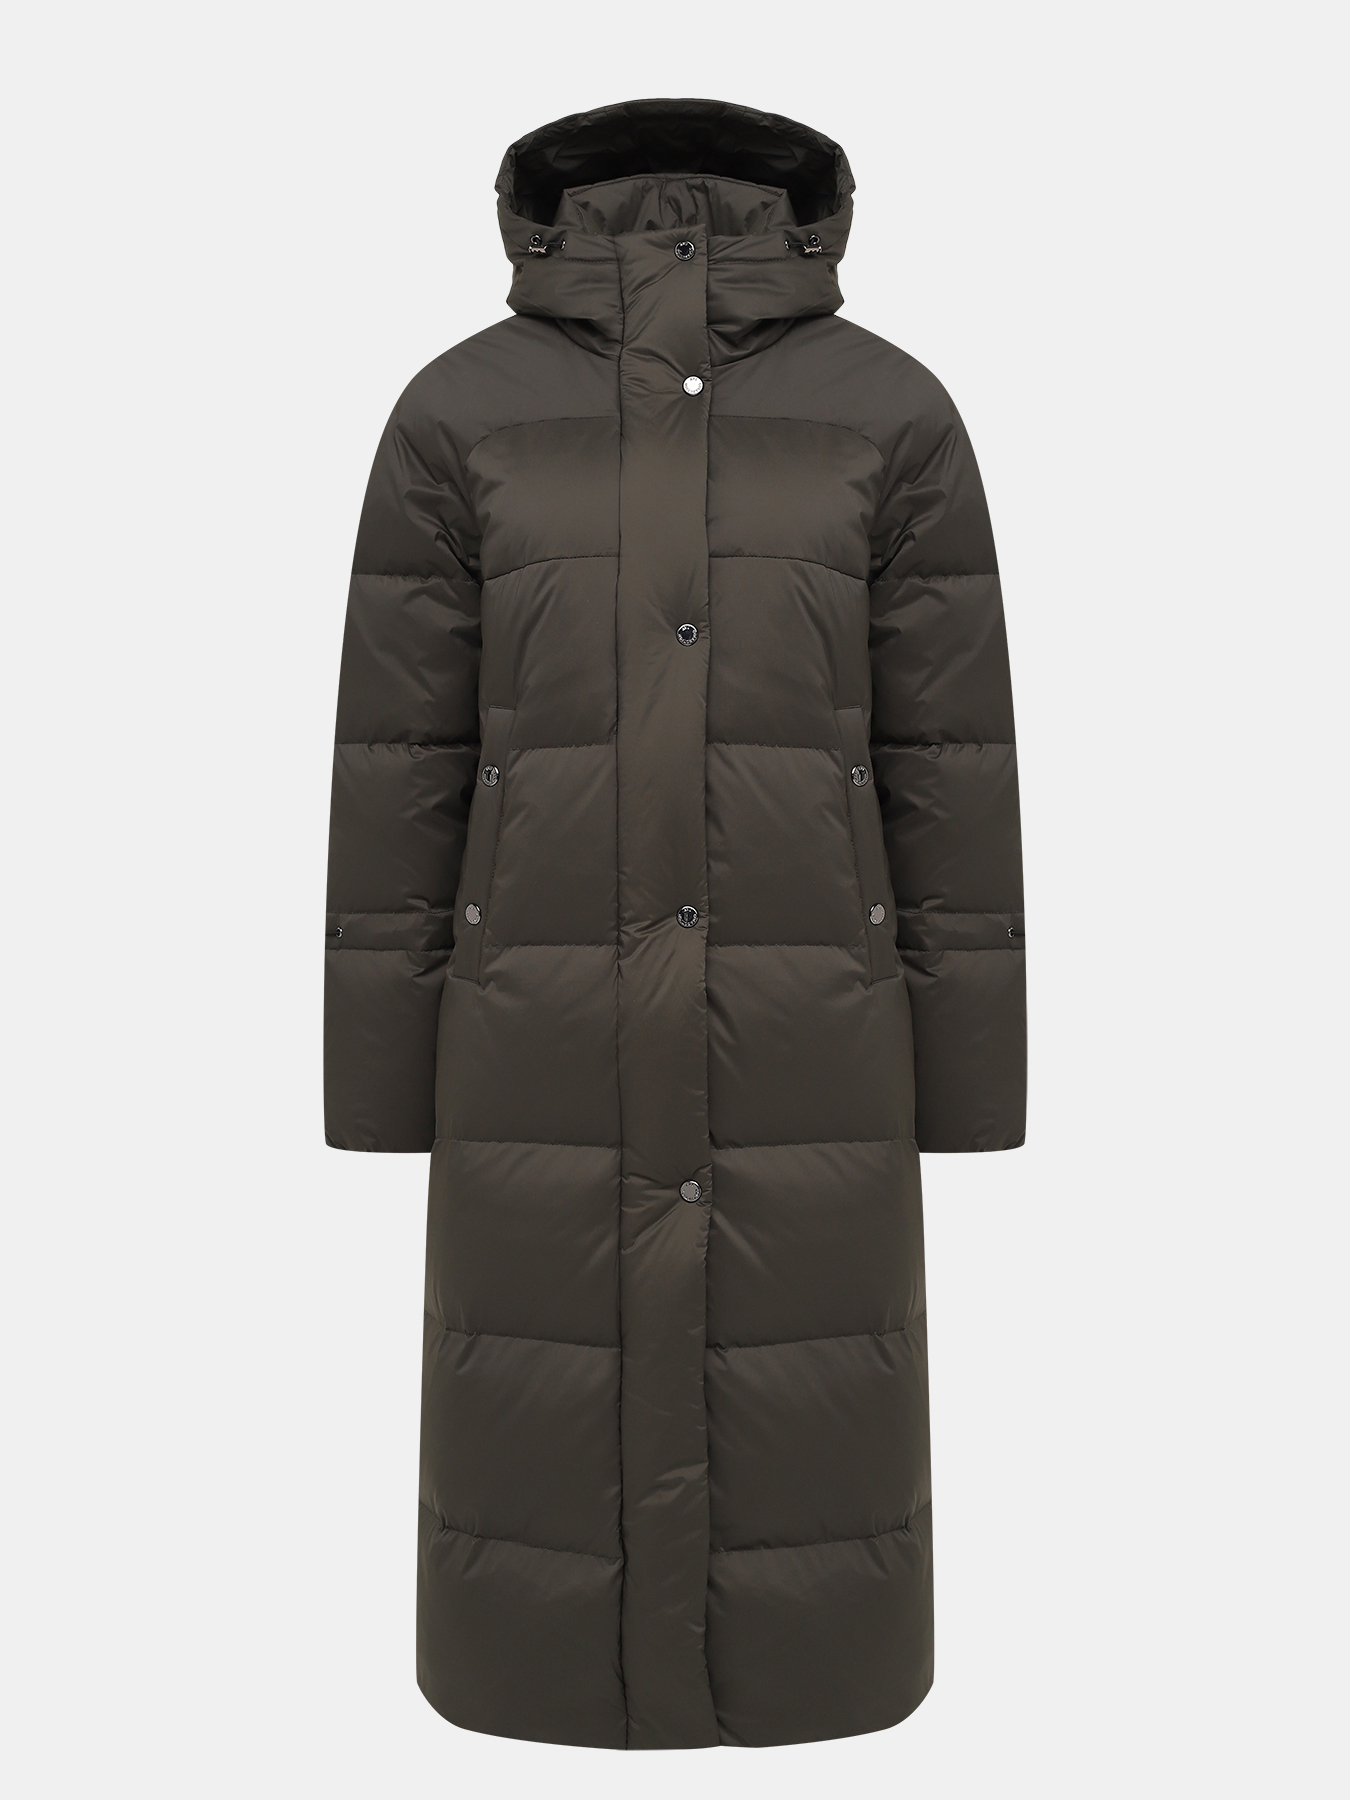 Пальто зимнее AVI 433638-025, цвет хаки, размер 48 - фото 1